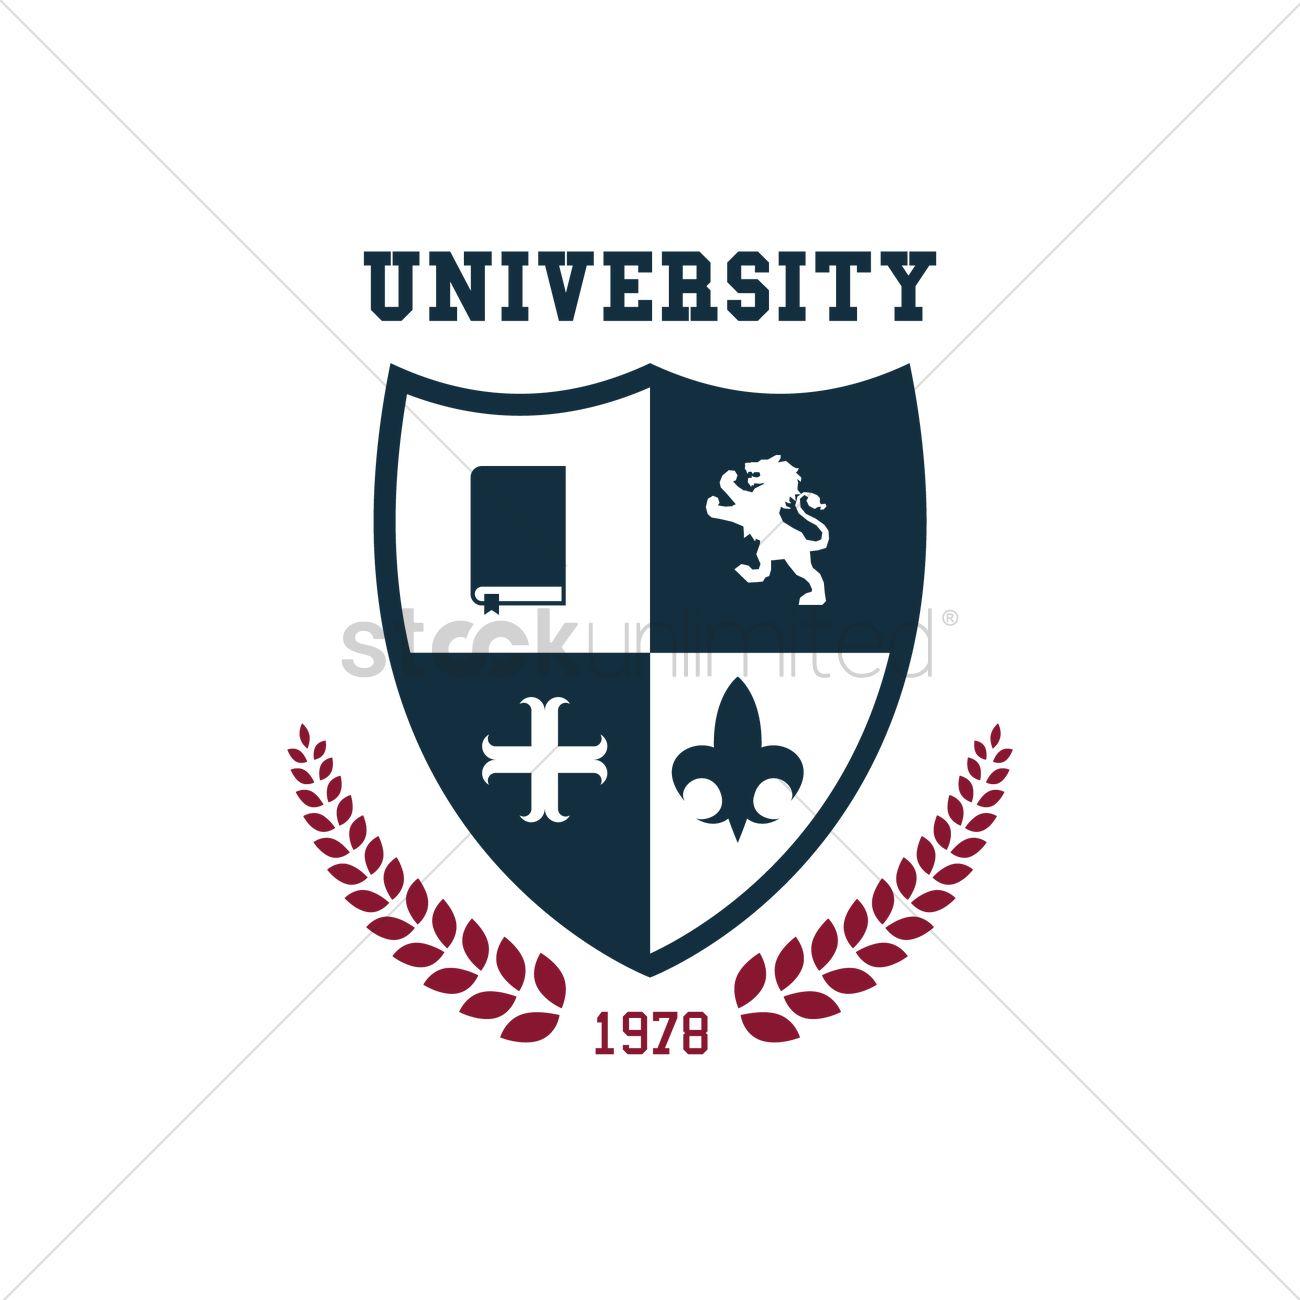 University Shield Logo - University logo design Vector Image - 1976103 | StockUnlimited